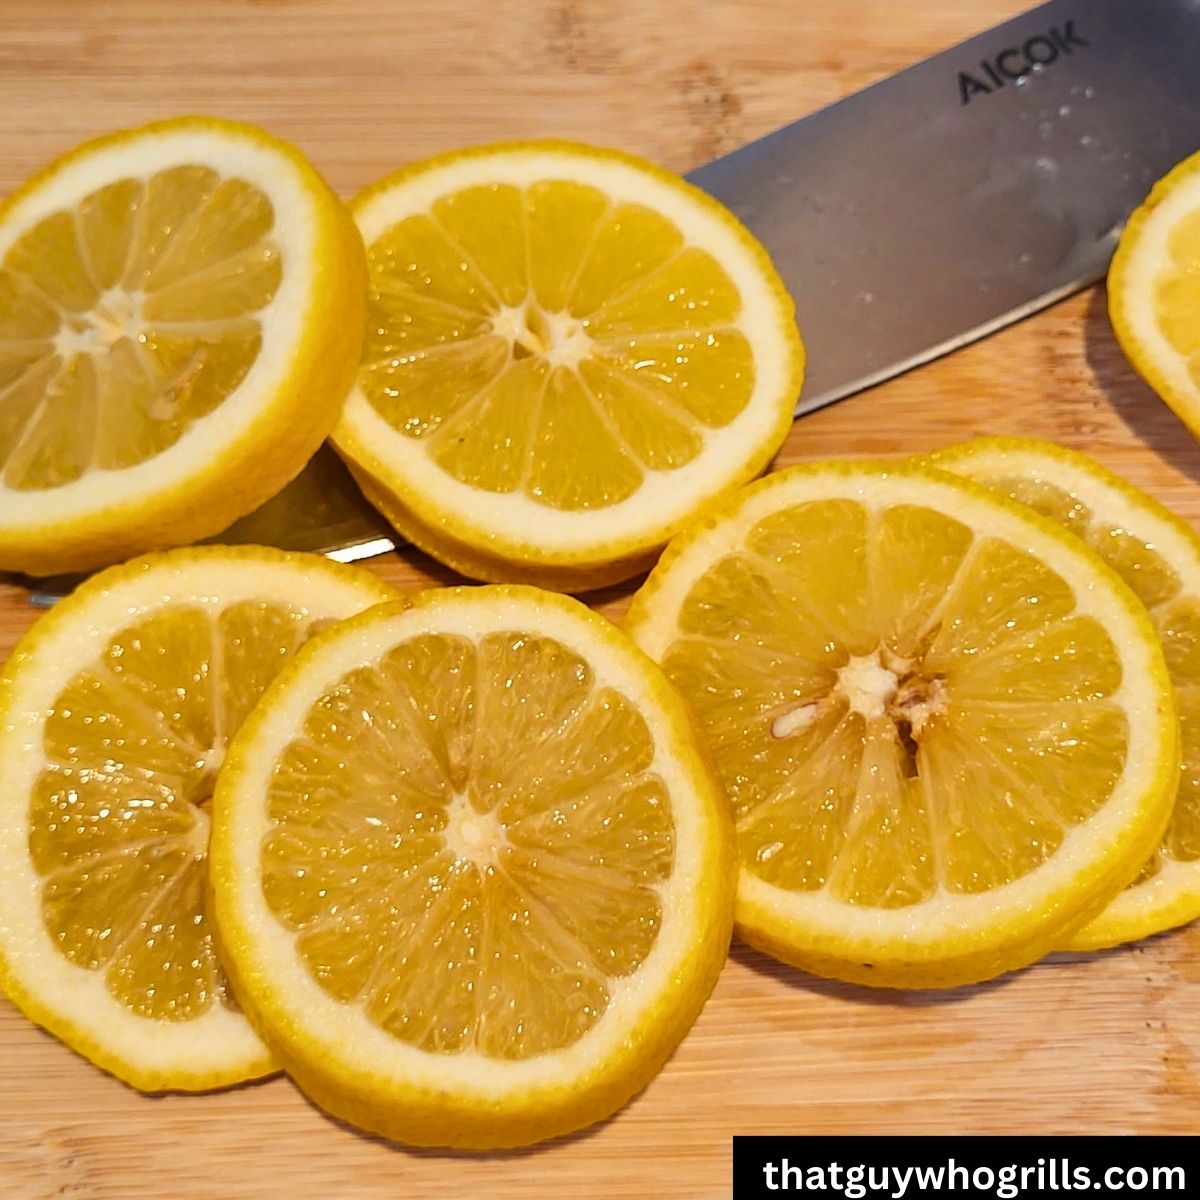 Sliced lemons on a cutting board with a knife